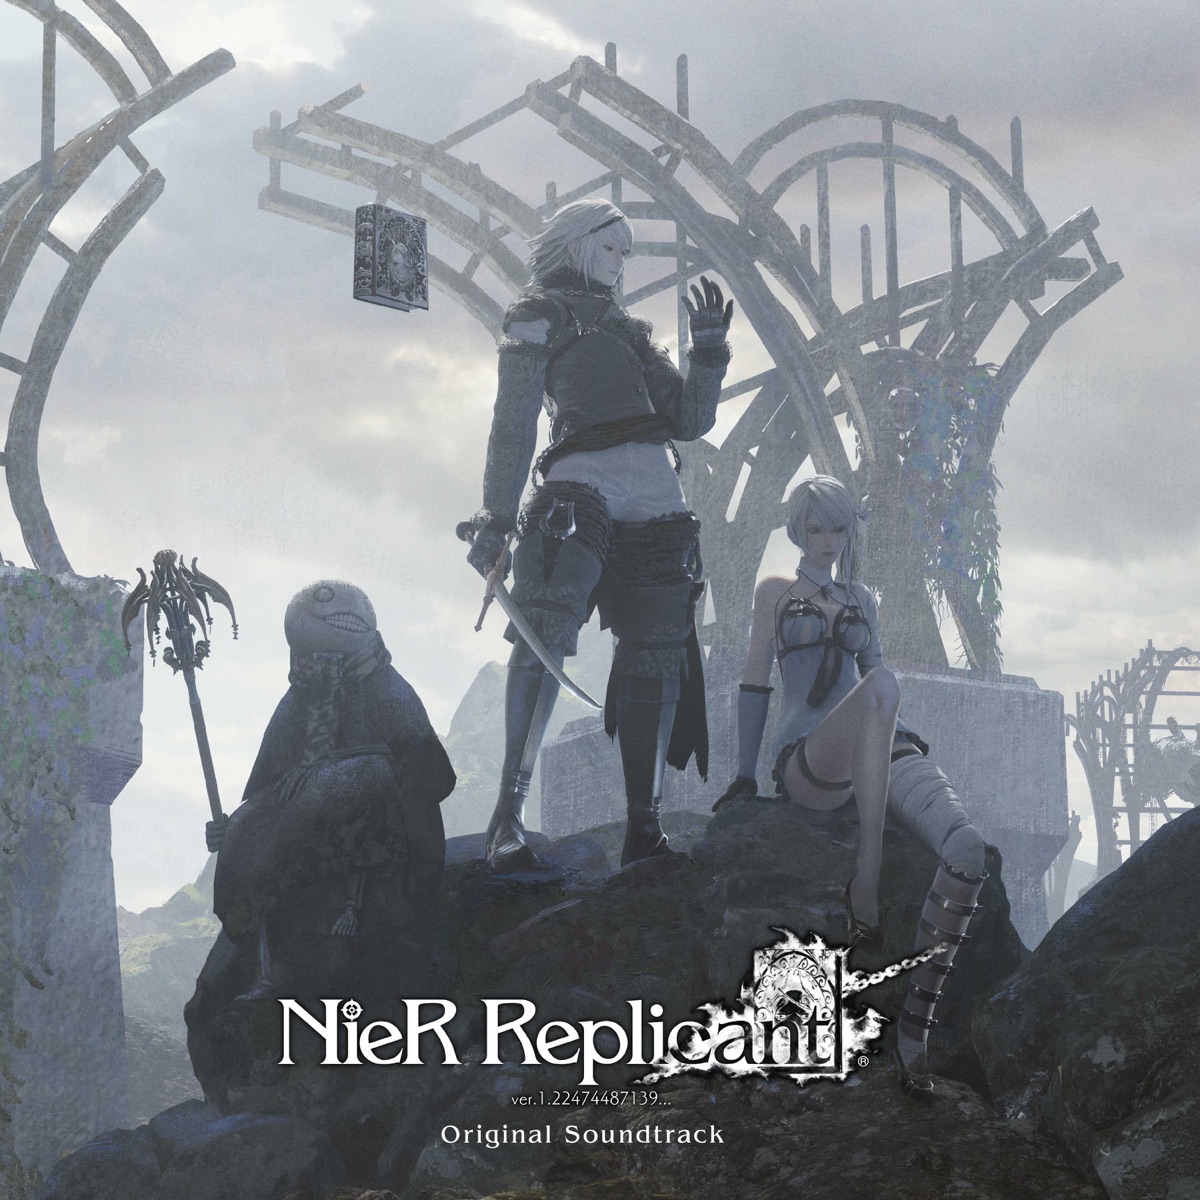 NieR Replicant ver.1.22474487139... Original Soundtrack by Keiichi Okabe on  iTunes